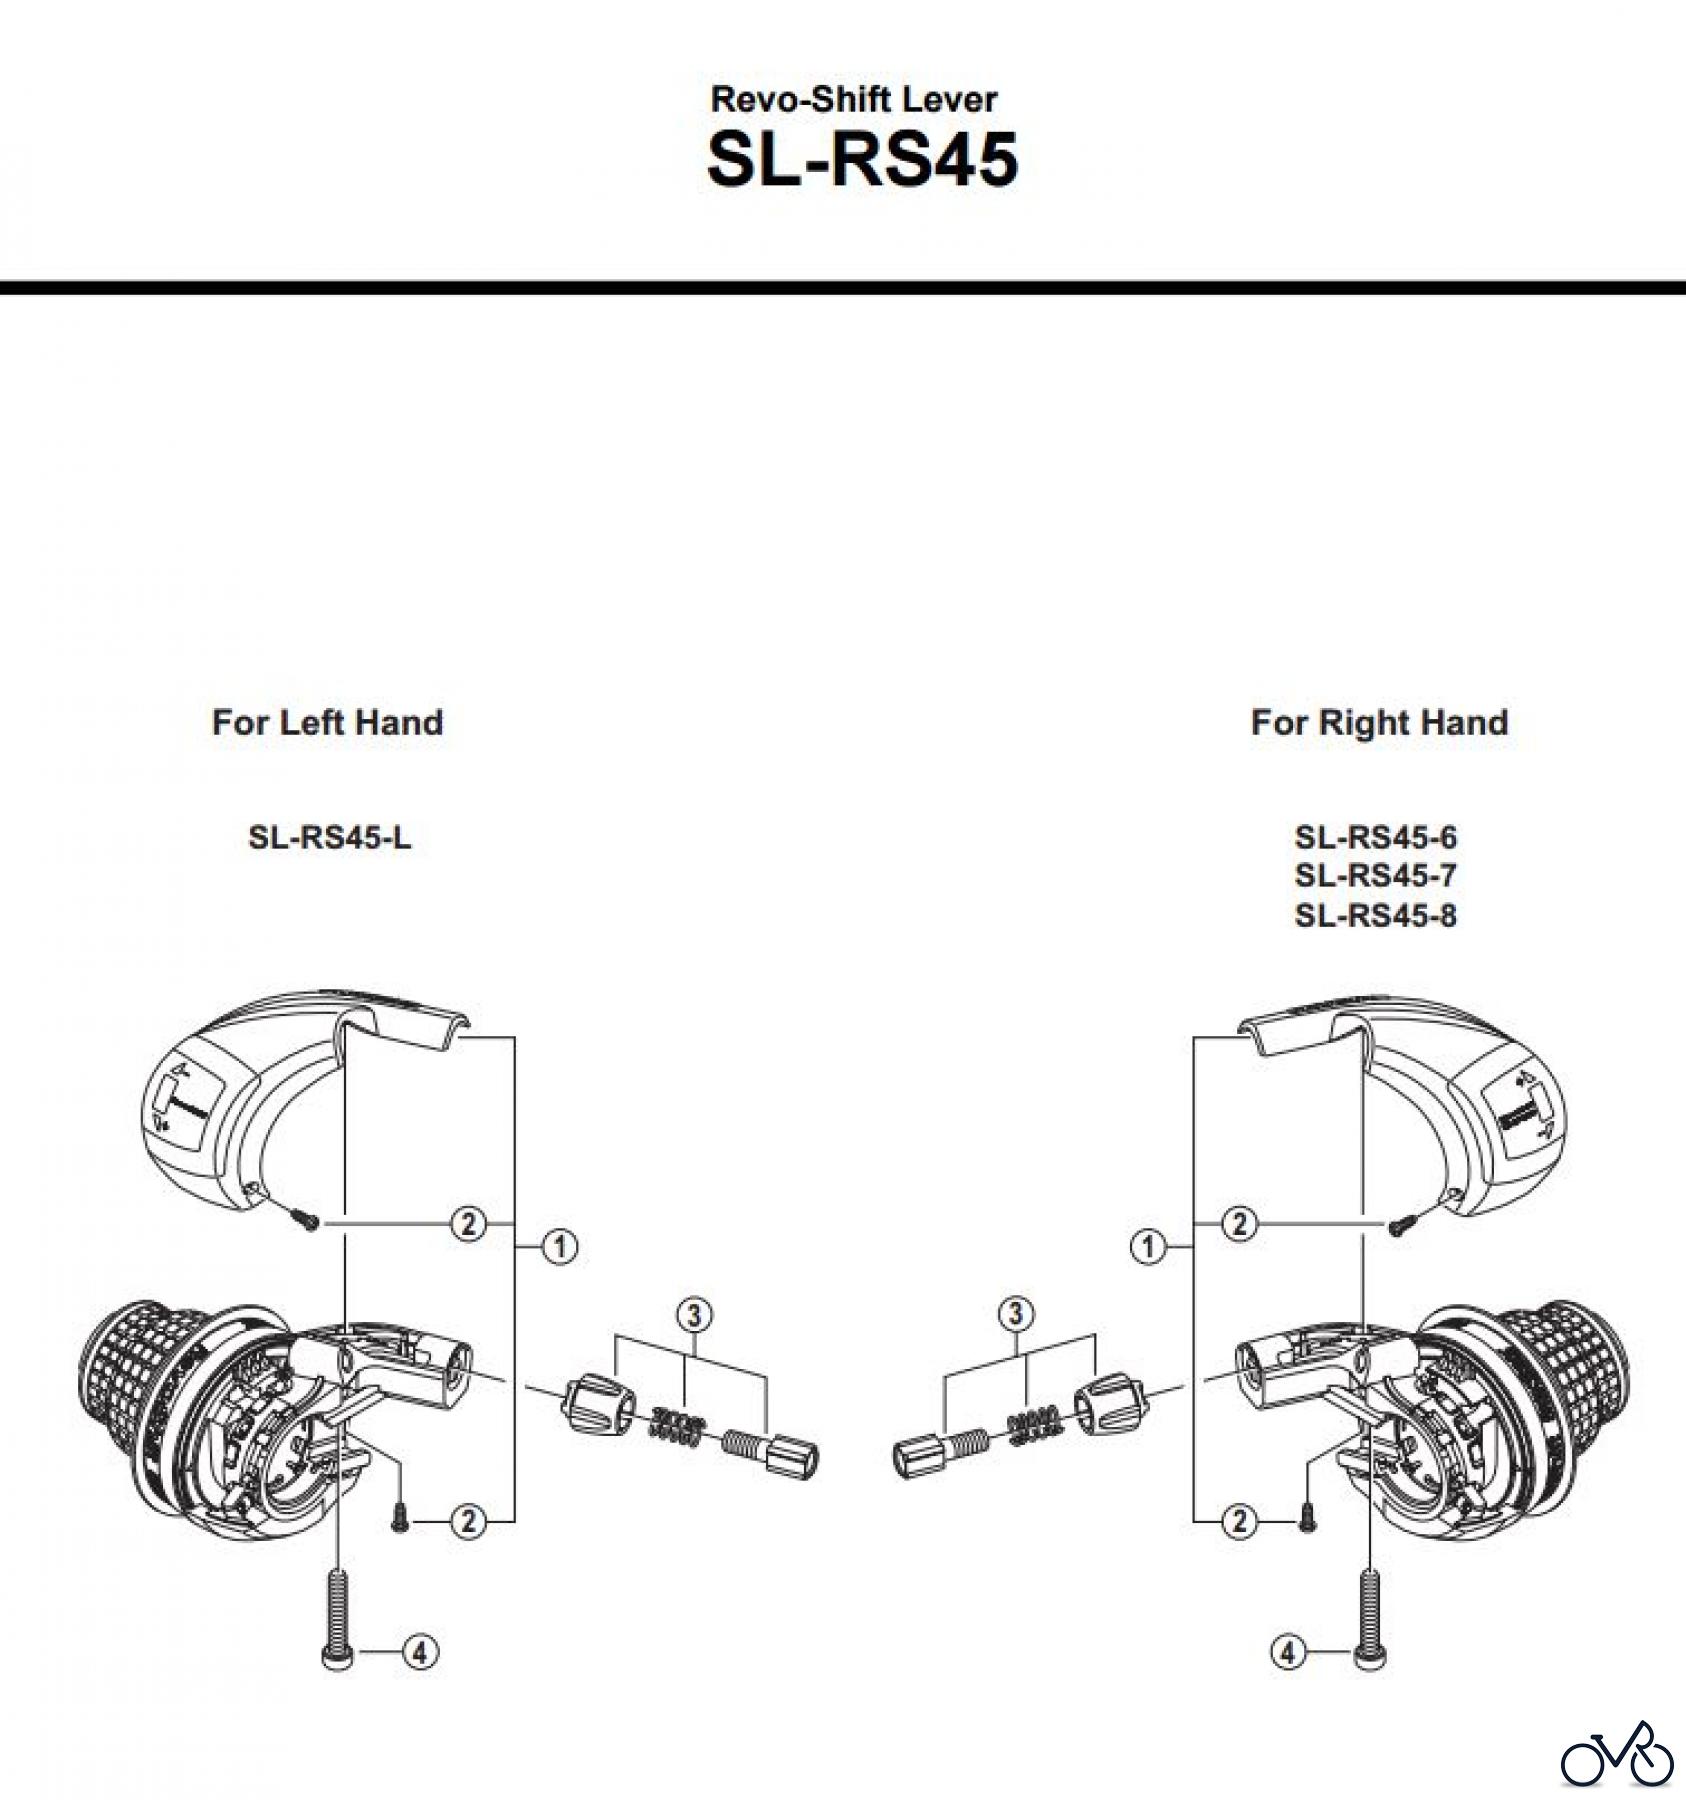  Shimano SL Shift Lever - Schalthebel SL-RS45 -3365 Revo-Shift Lever